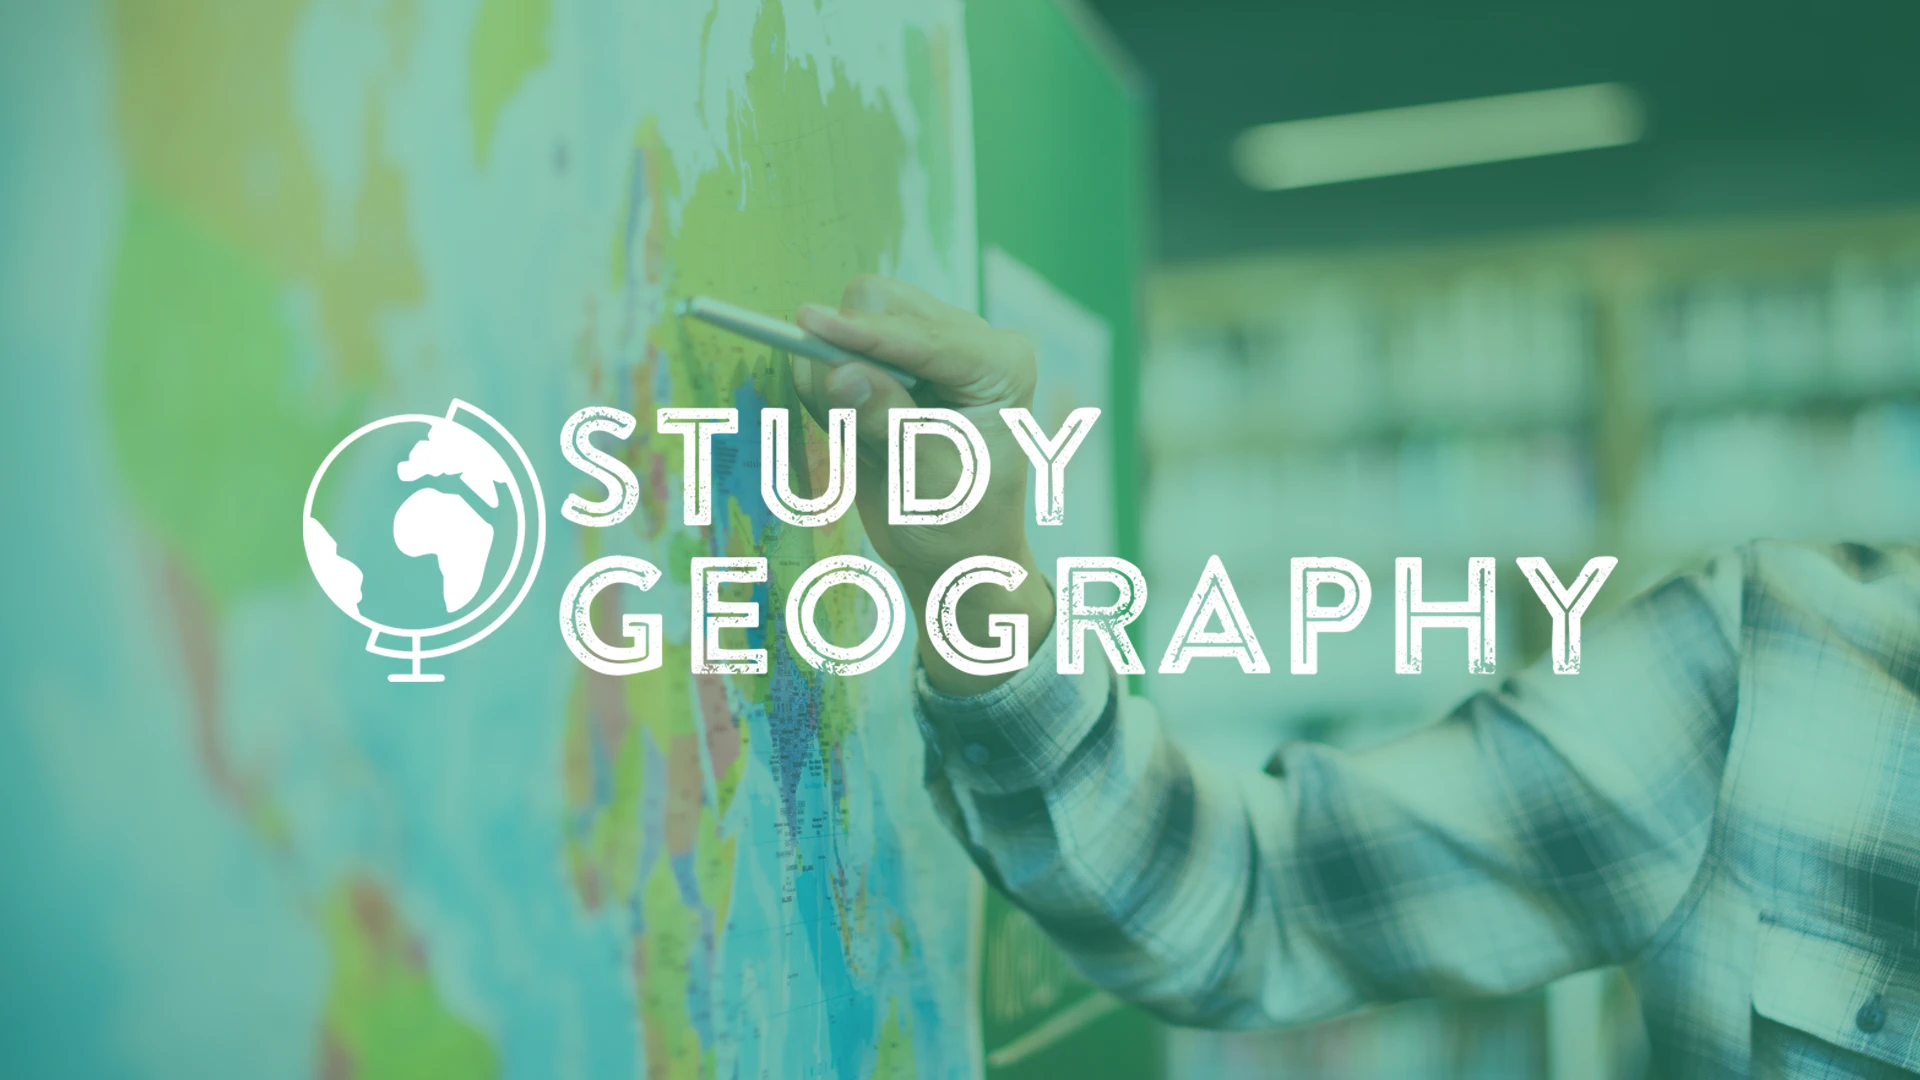 (c) Studygeography.co.uk